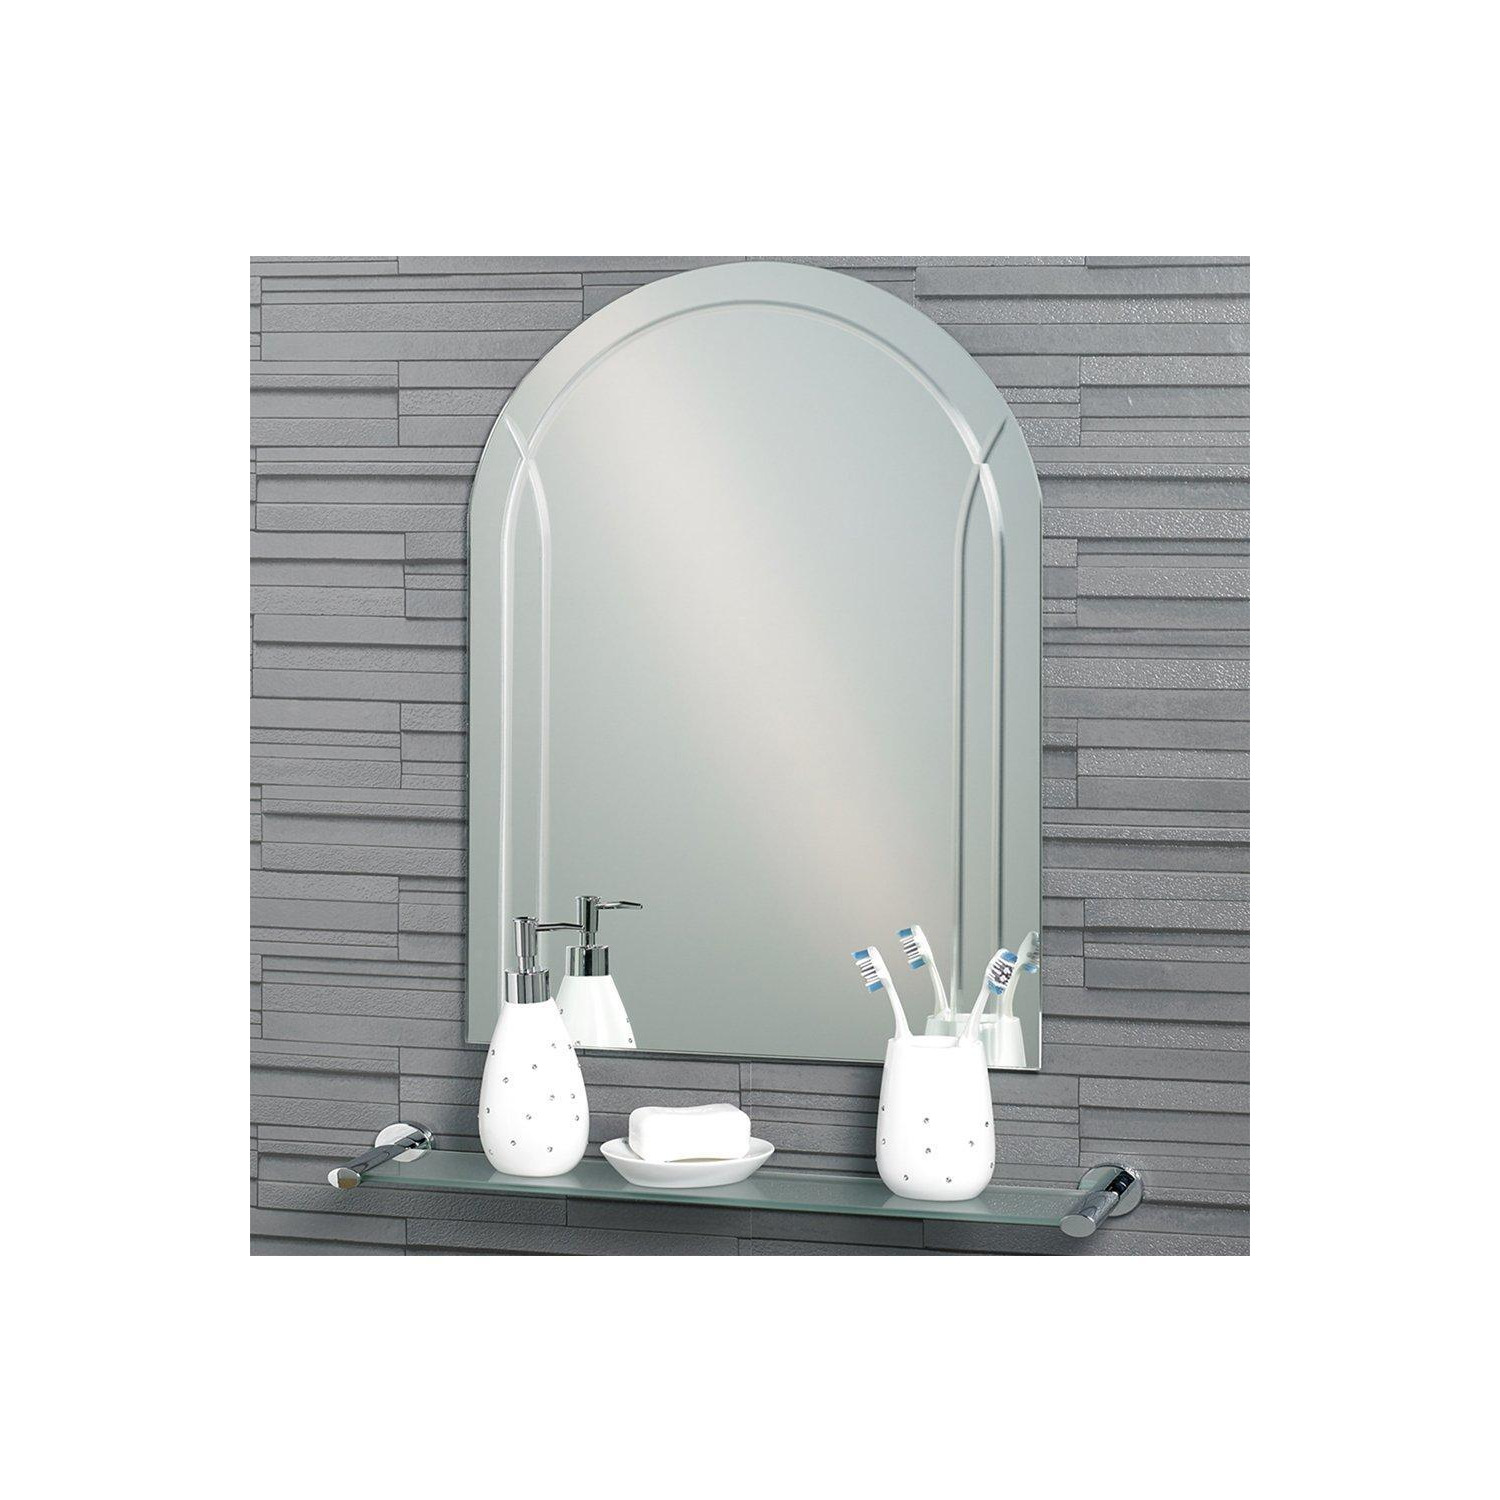 'Soho' Arch Mirror 60 X 45Cm - image 1